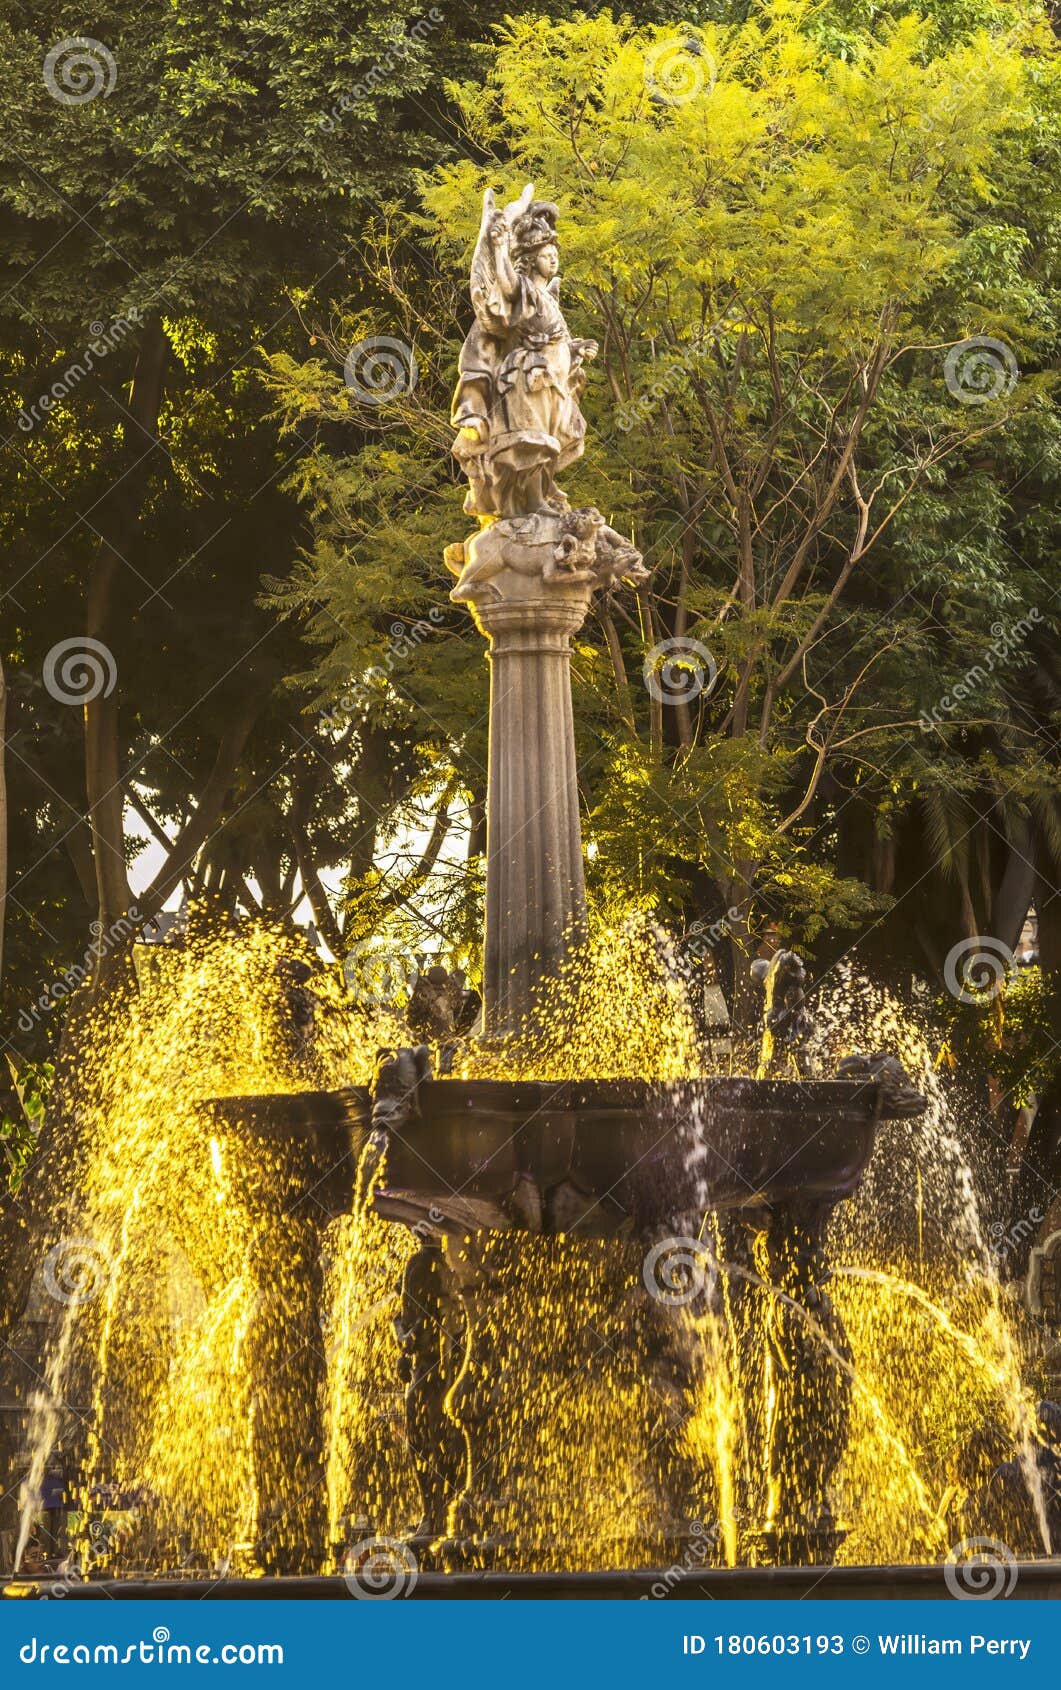 arcangel fountain zocalo park plaza sunset puebla mexico